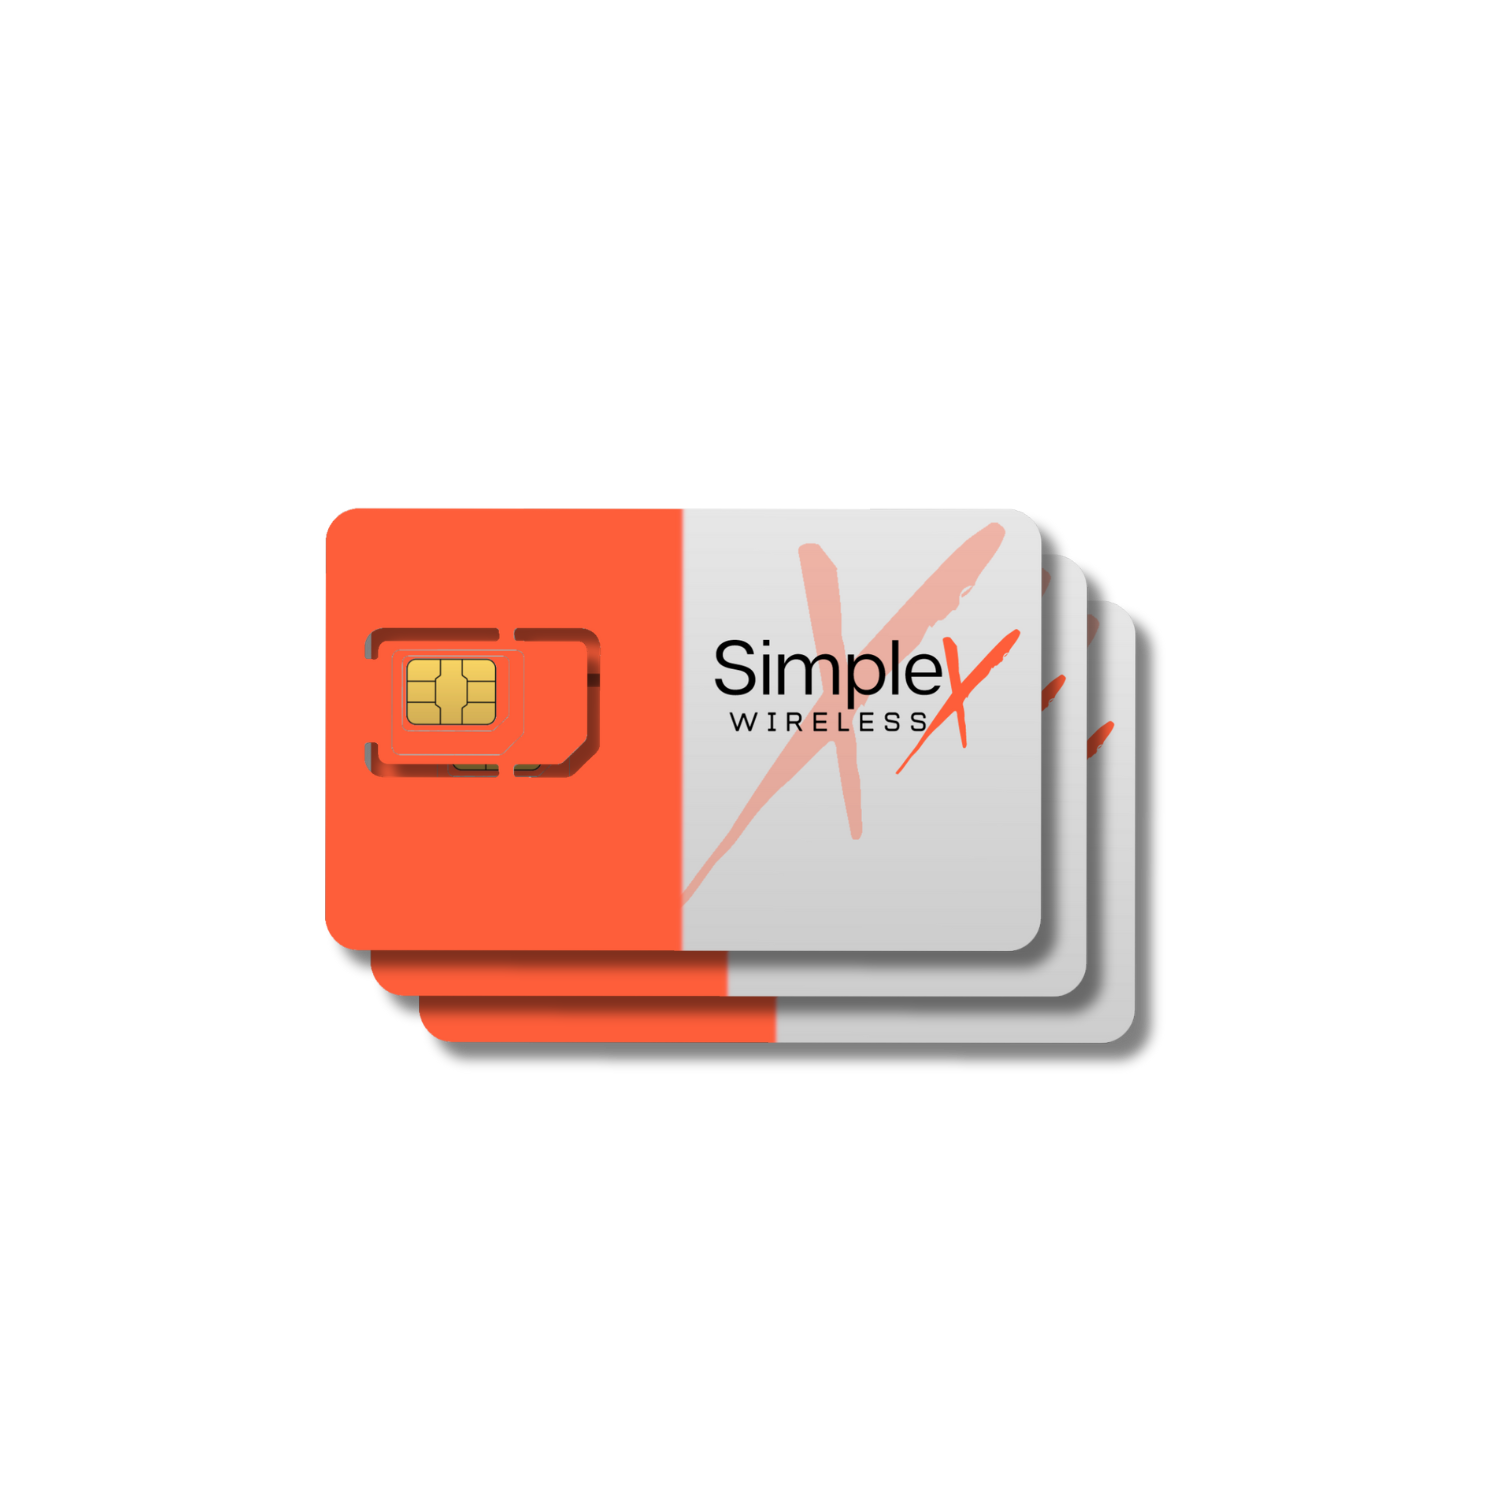 SImplex SIM card stacked